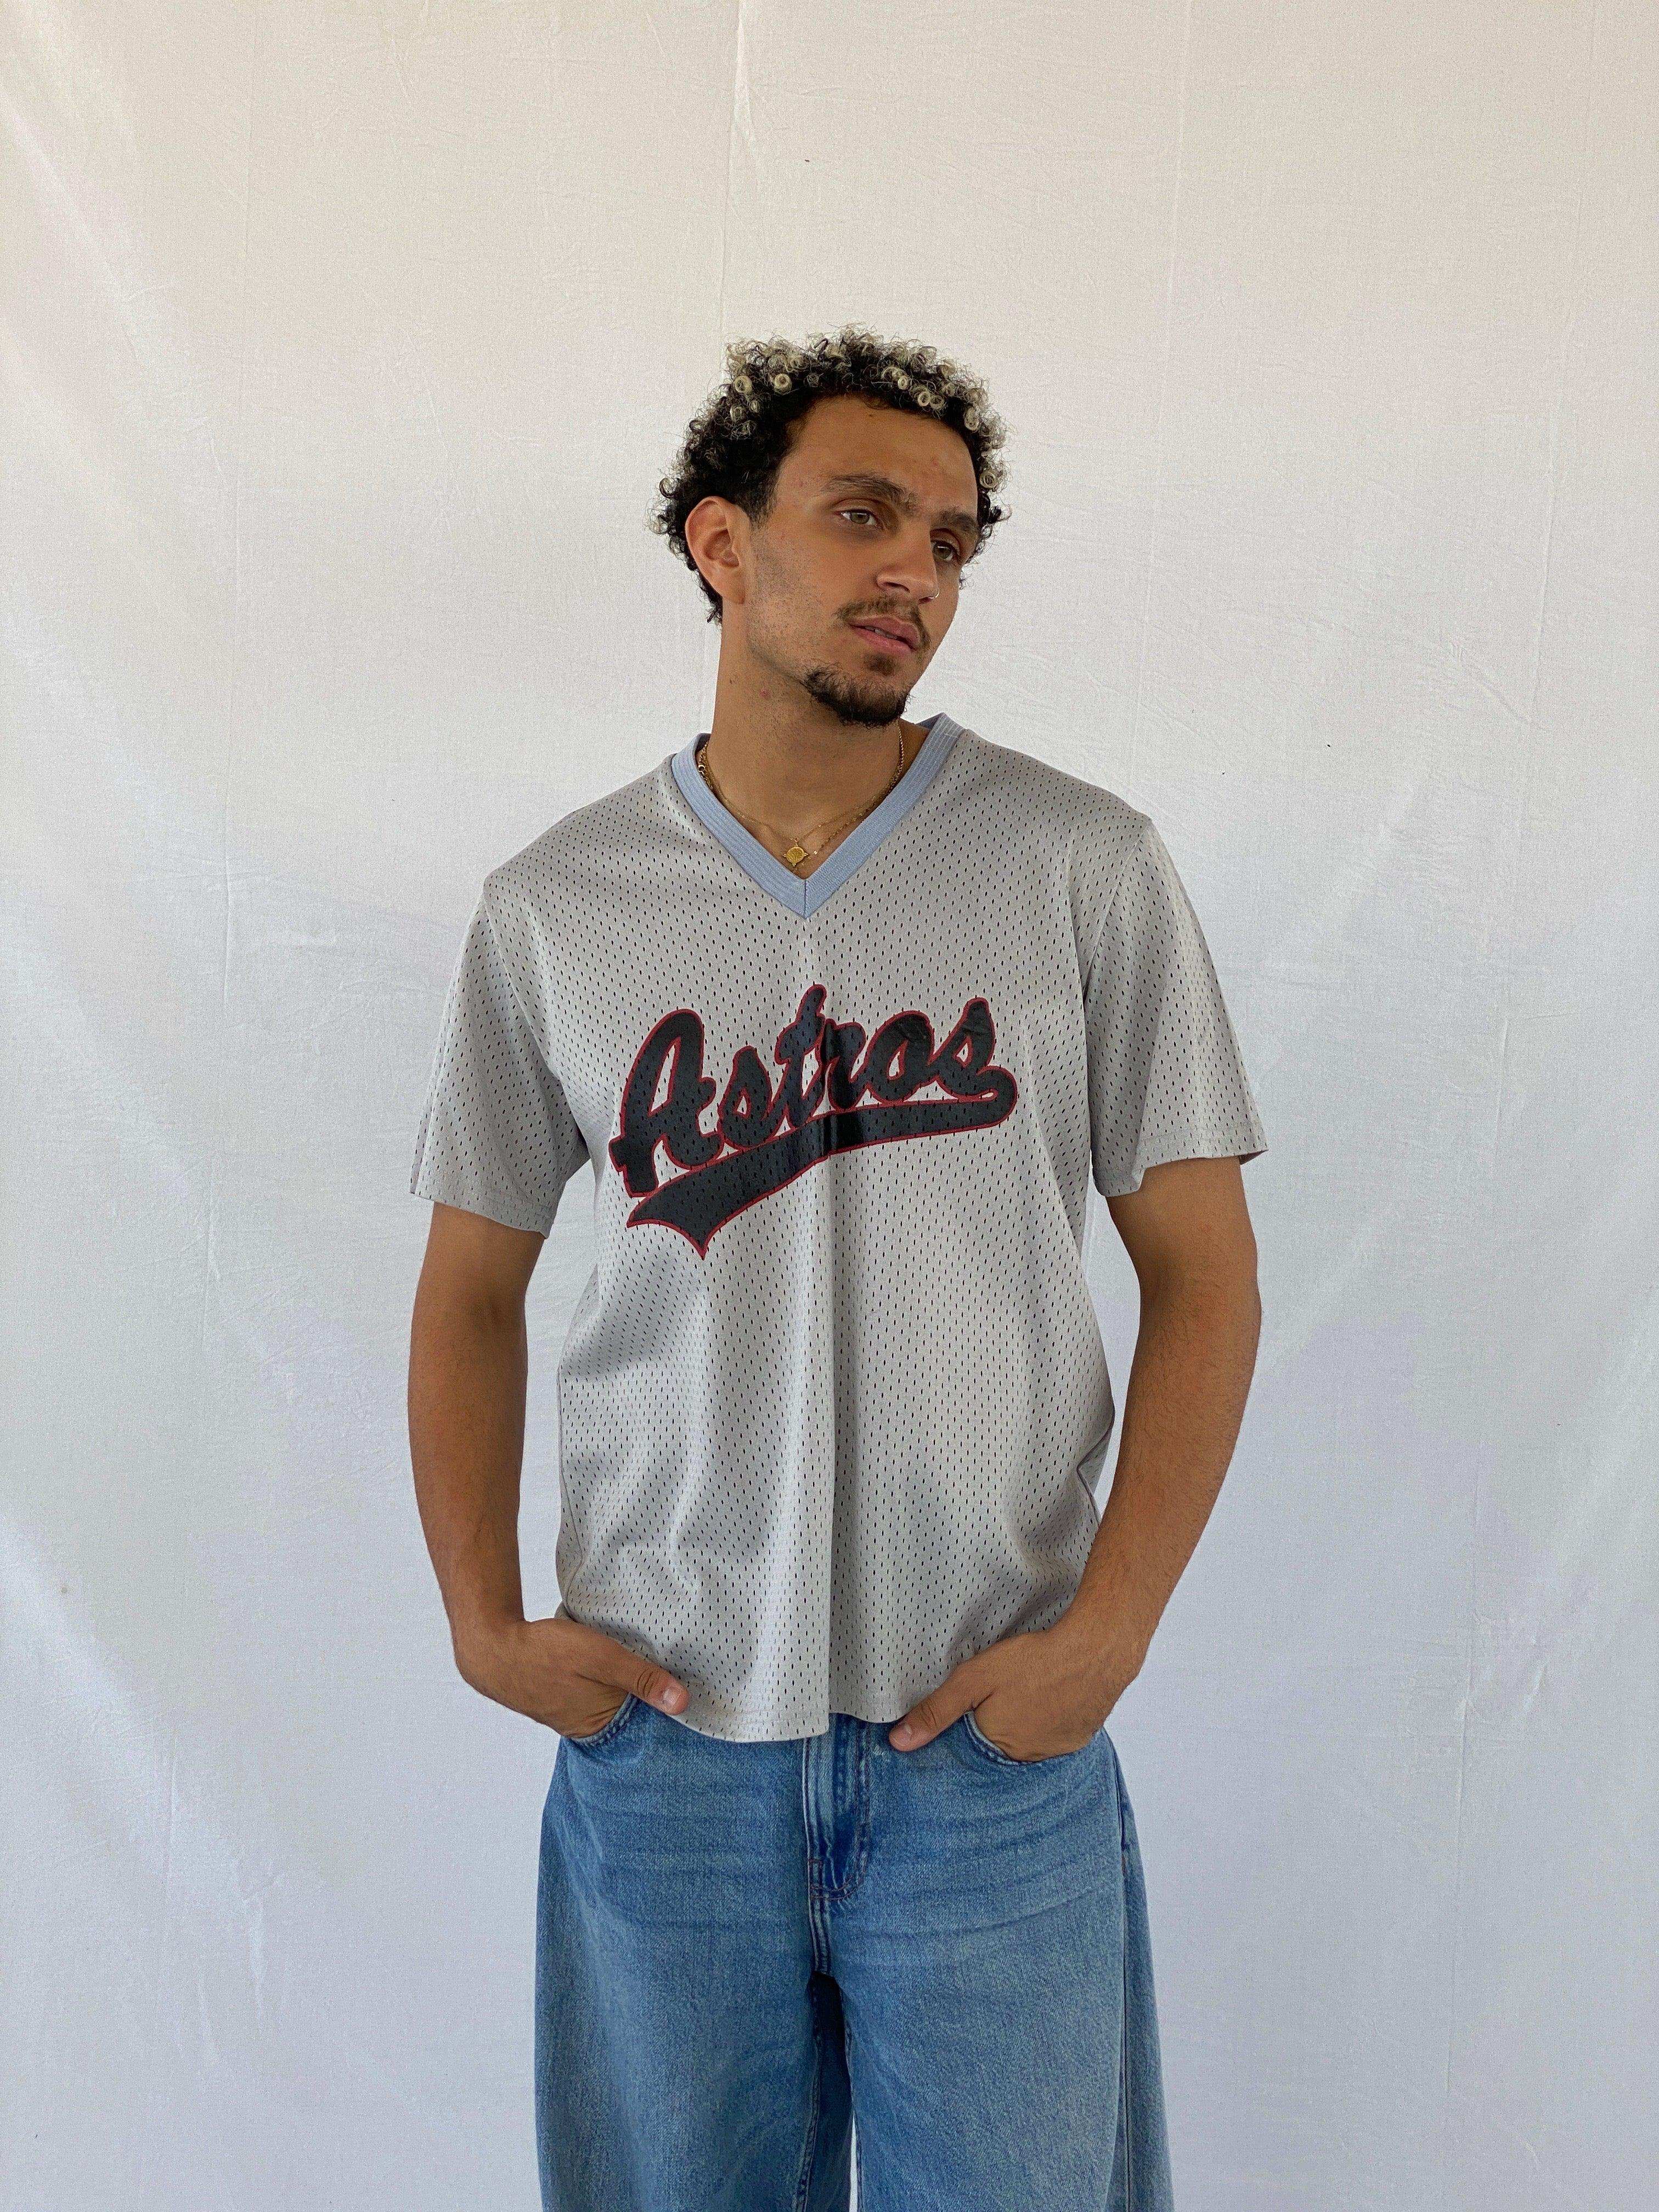 Astros 27 Mesh Jersey - Balagan Vintage Half Sleeve Top Abdullah, NEW IN